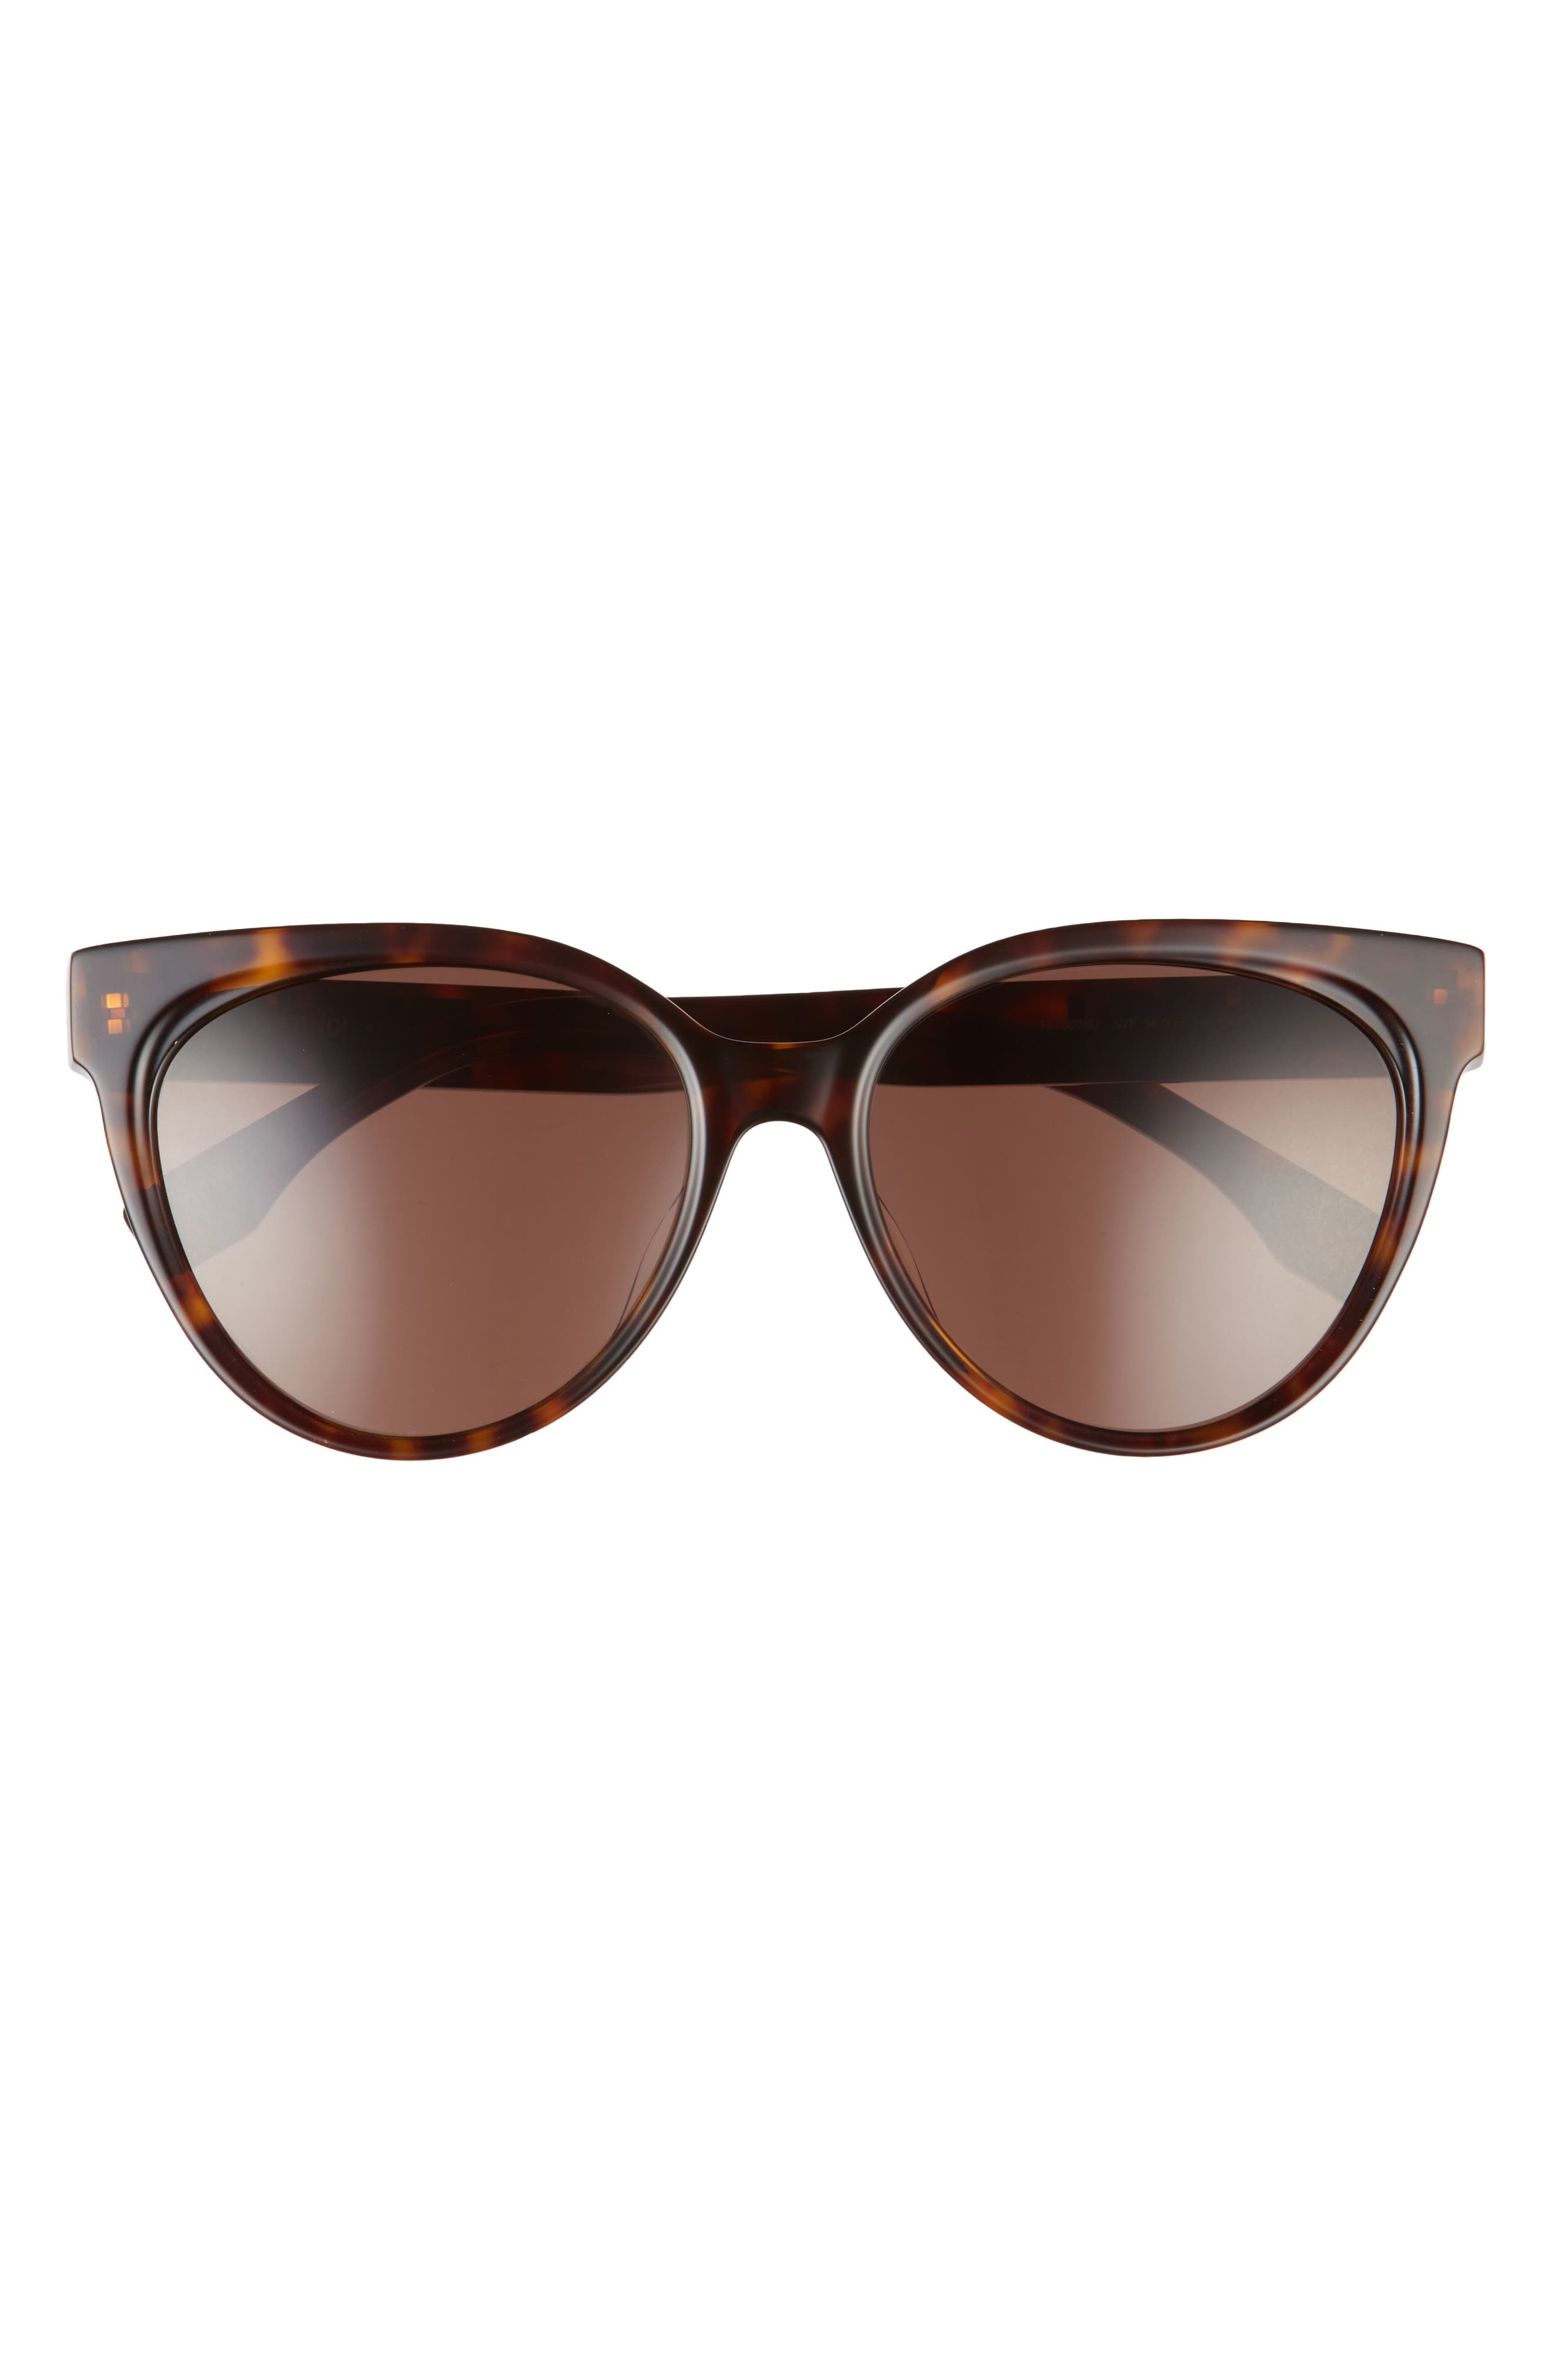 Fendi 56mm Cat Eye Sunglasses in Dark Havana /Brown at Nordstrom